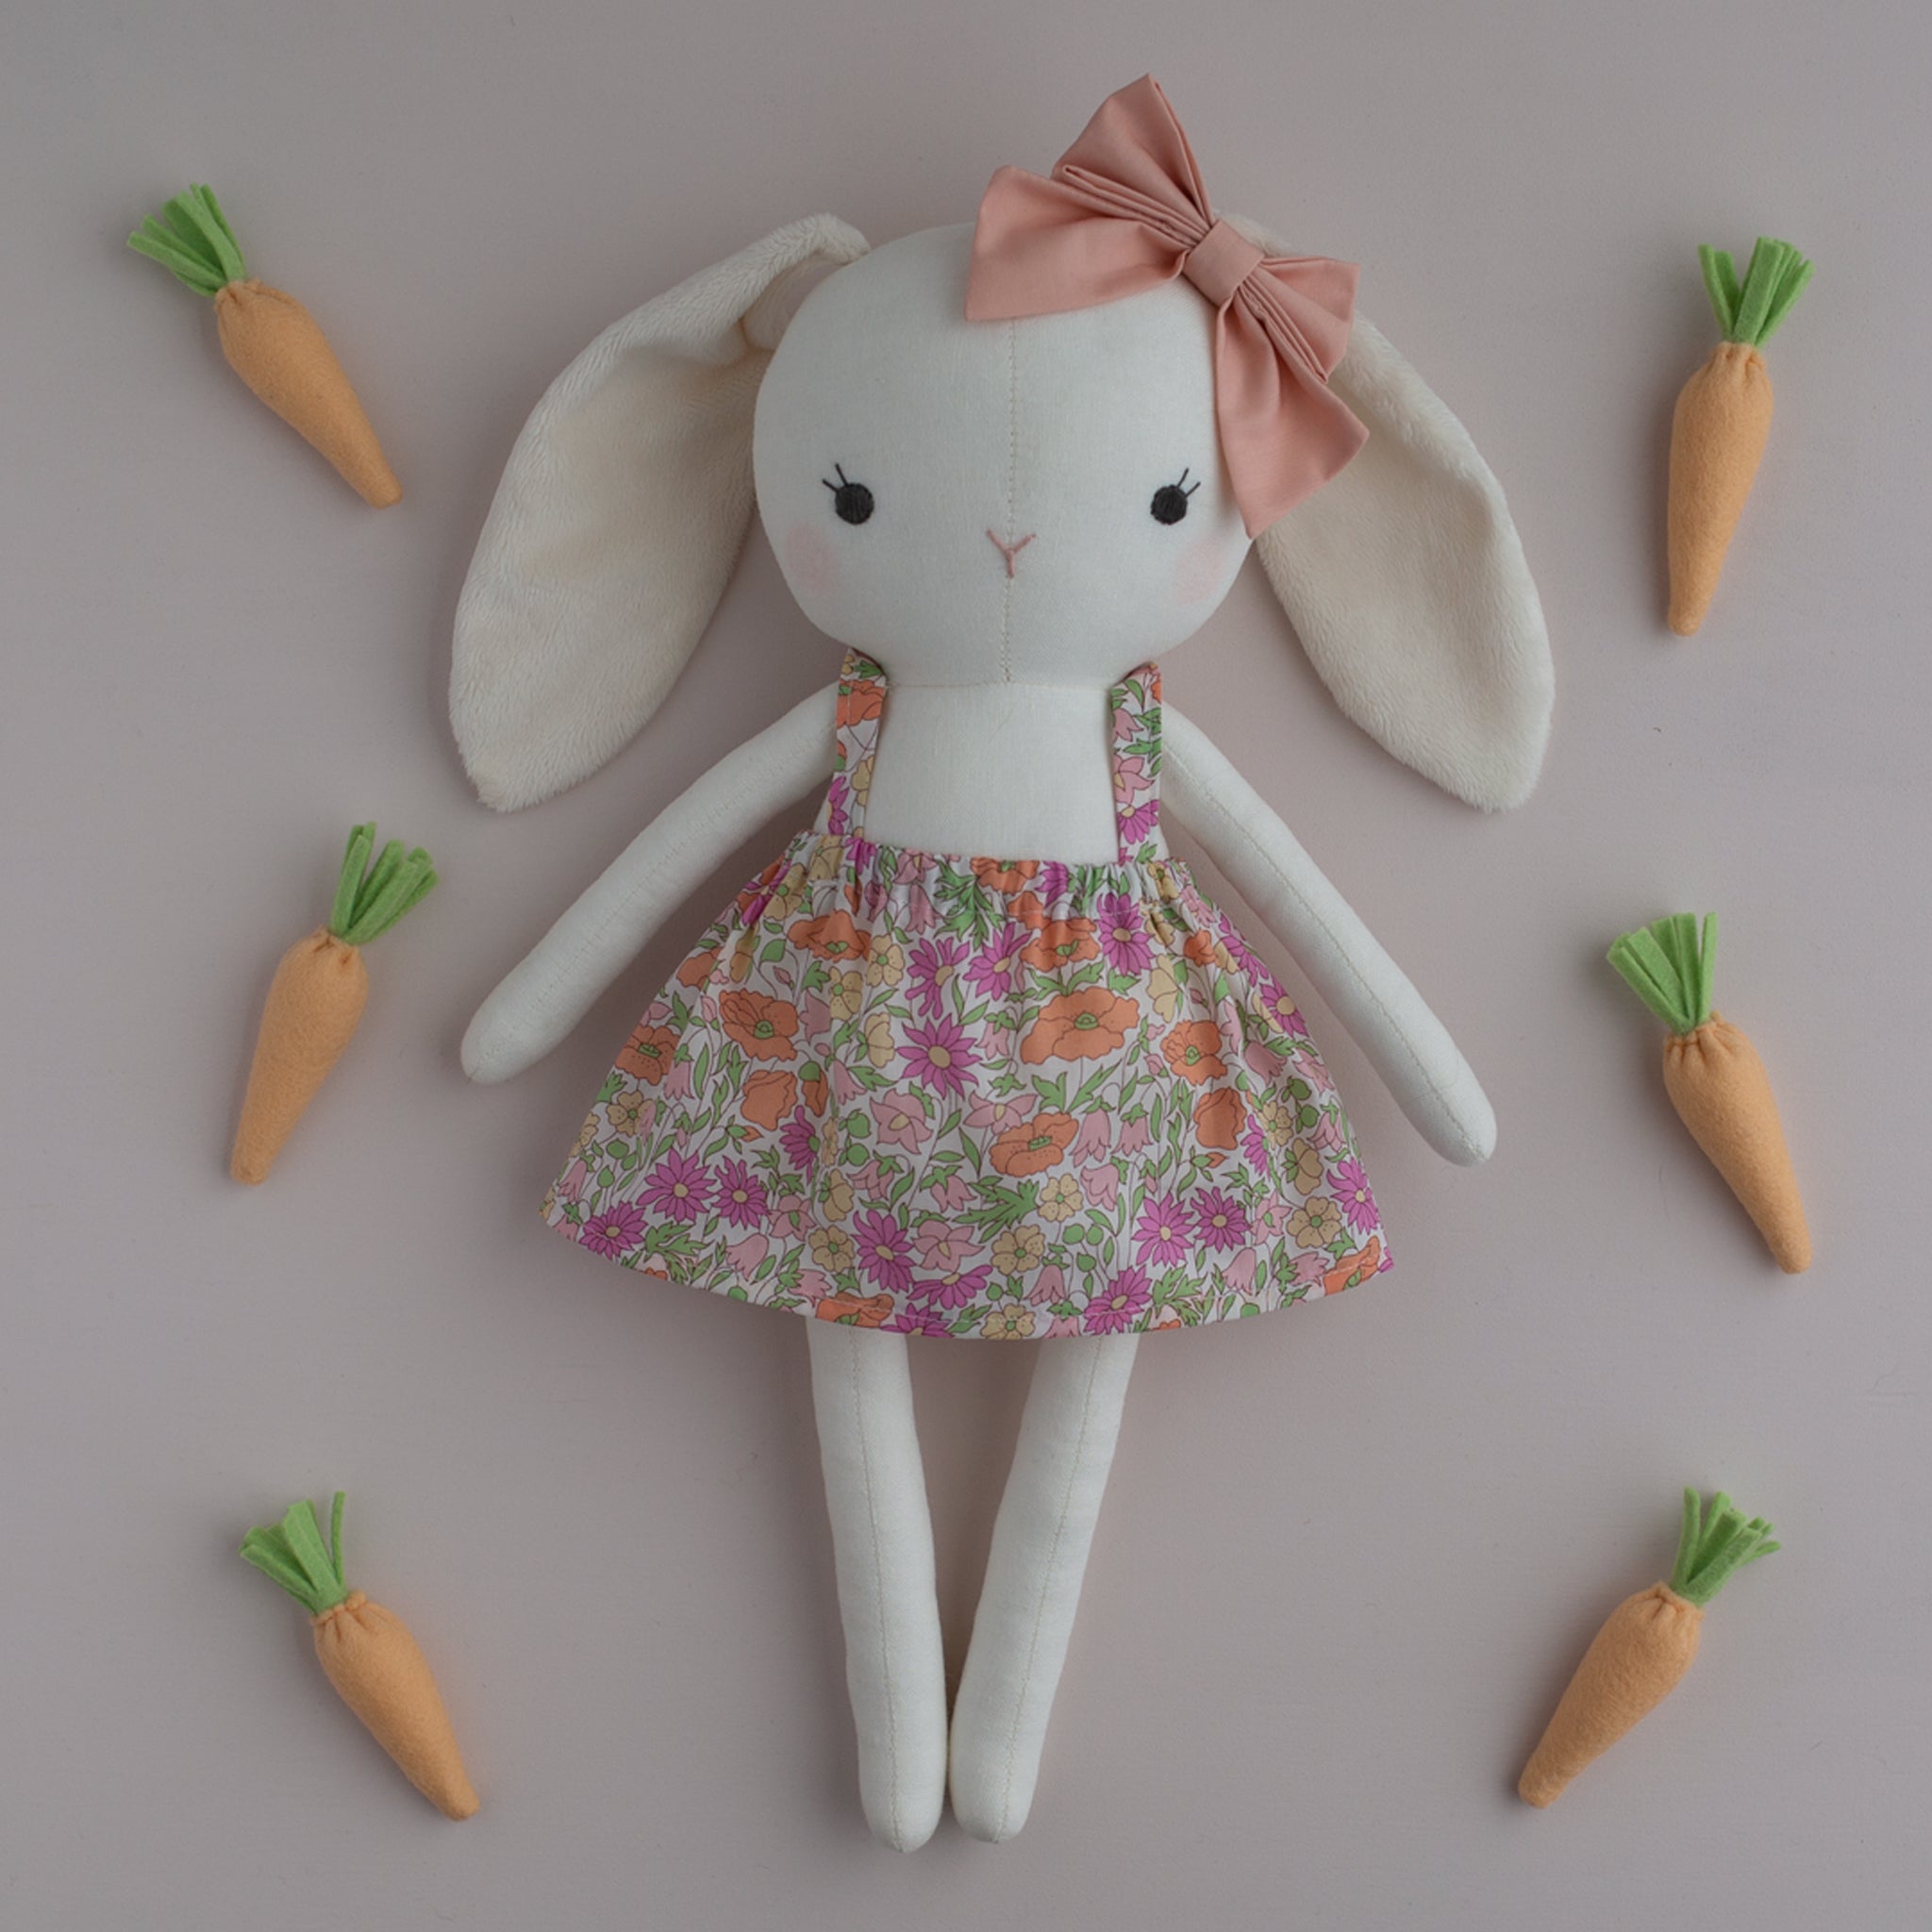 felt carrot sewing pattern - handmade bunny with felt carrots